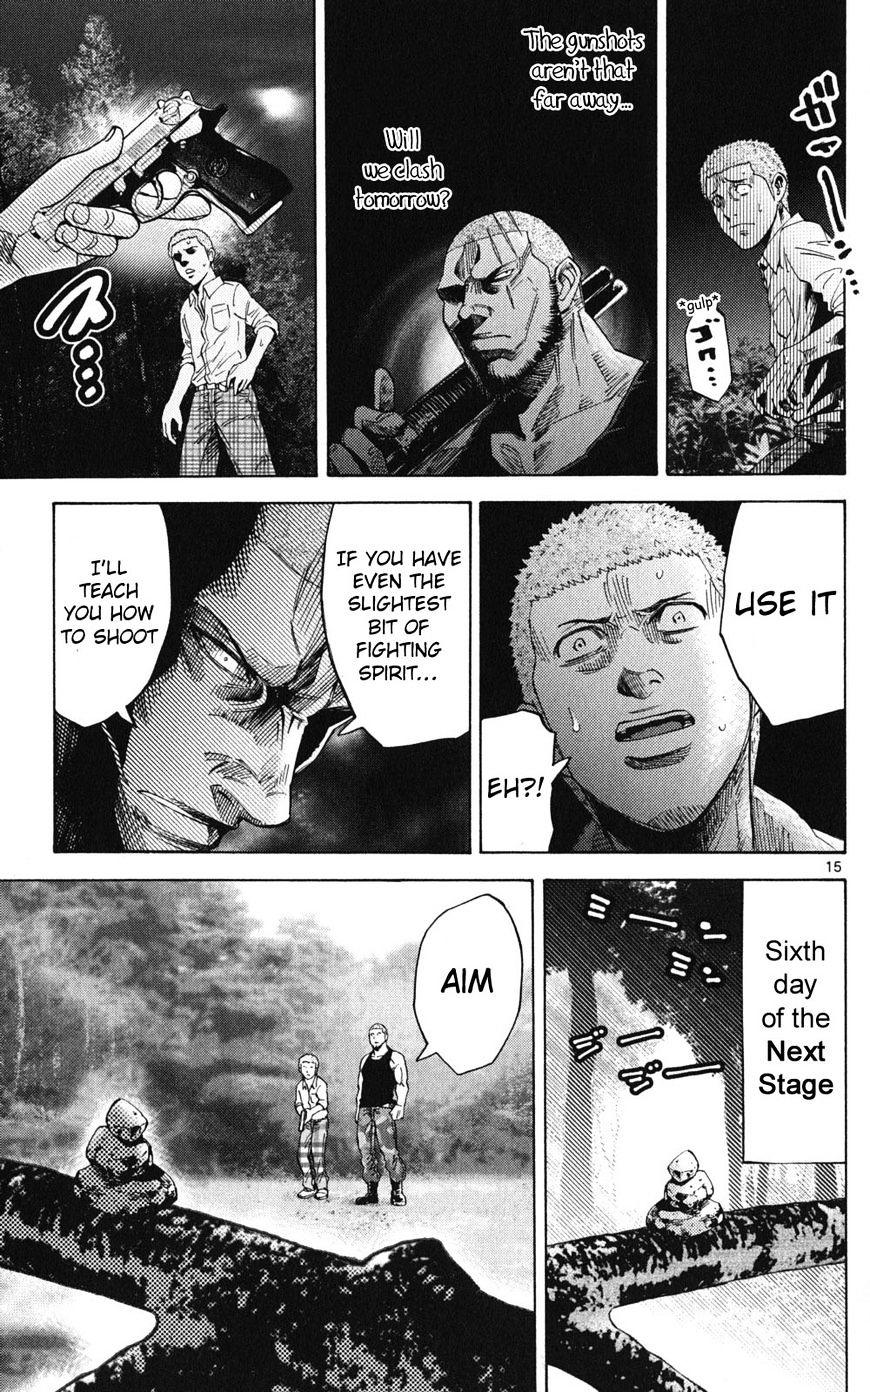 Imawa No Kuni No Alice Chapter 49.2 : Side Story 5 - King Of Spades (2) page 15 - Mangakakalot